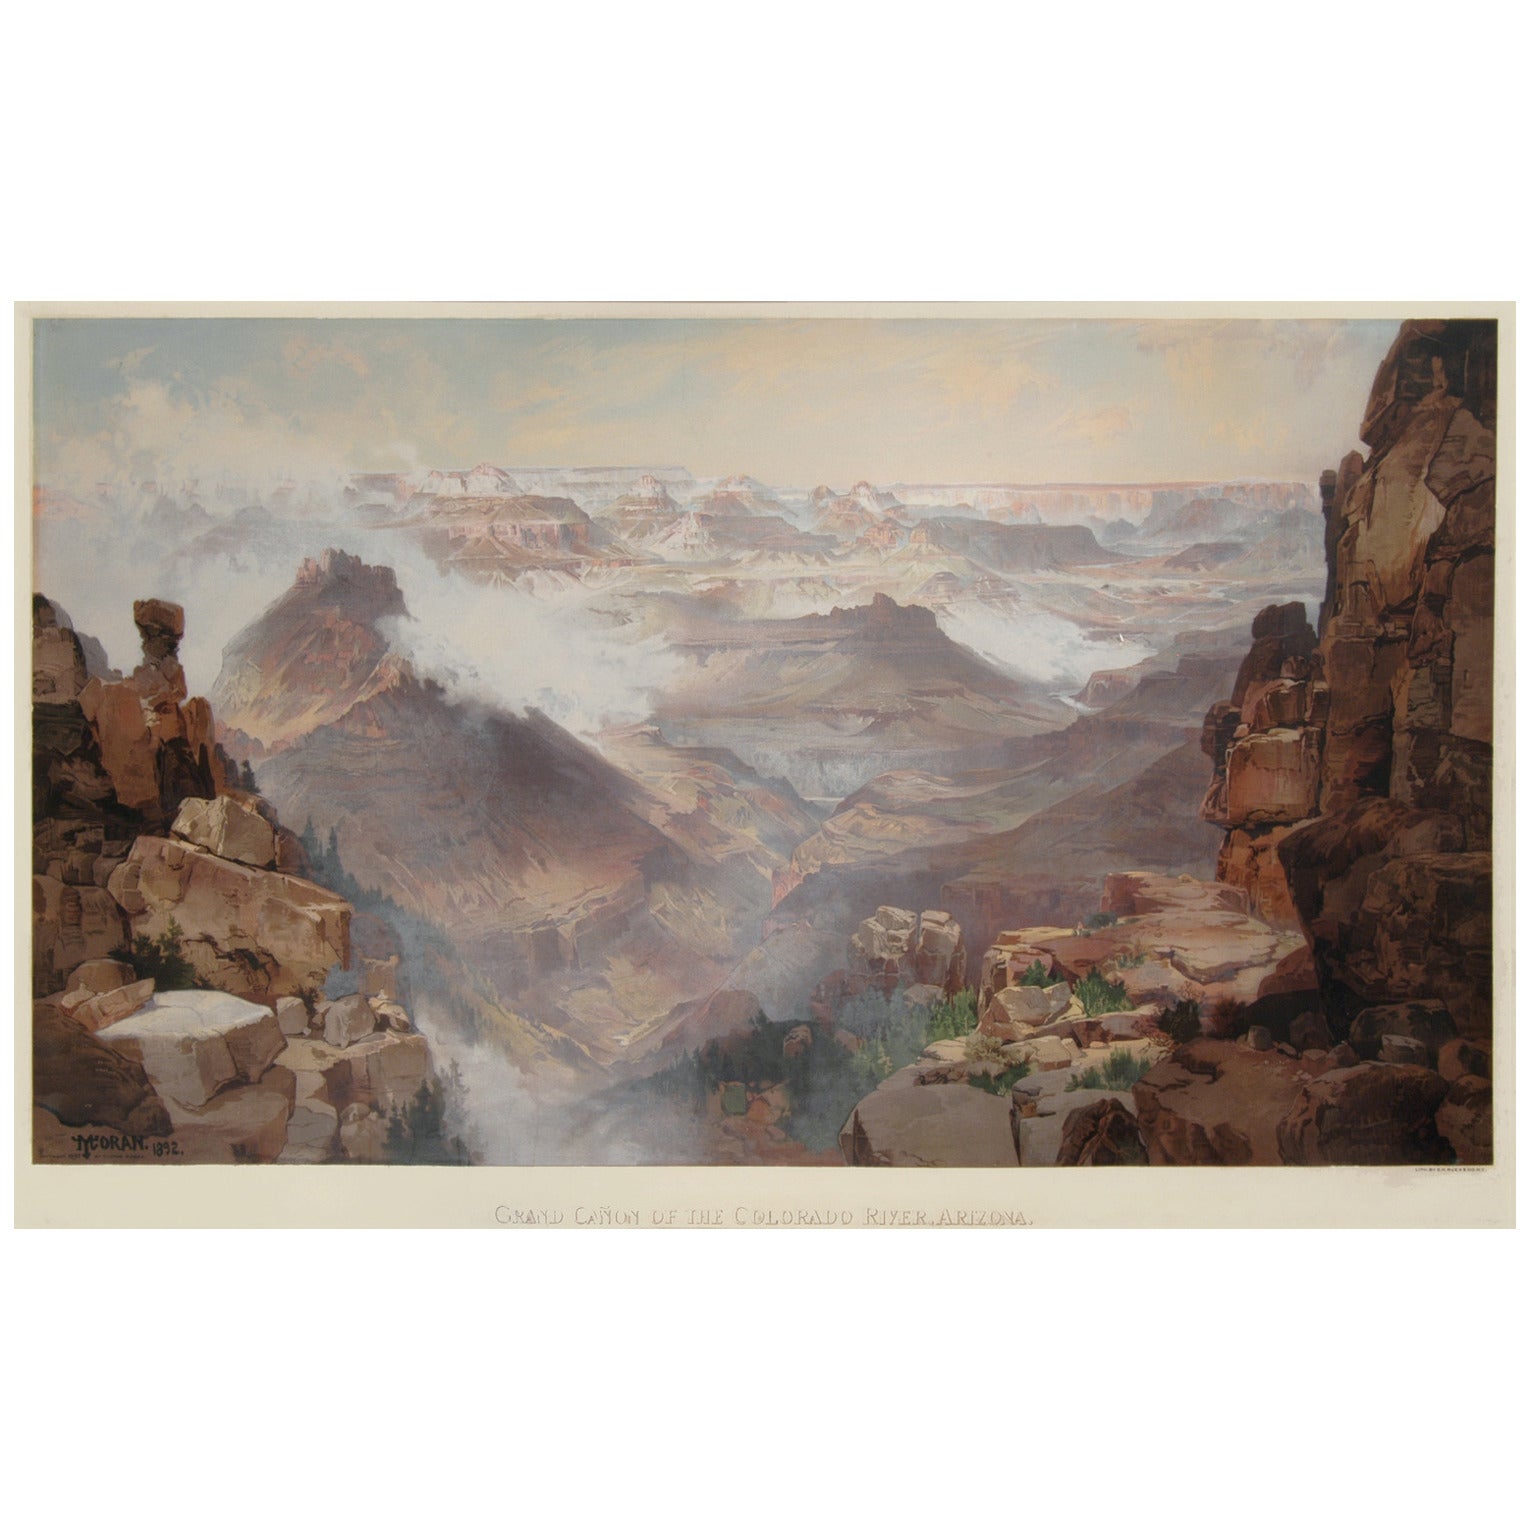 Grand Canyon of the Colorado River, Arizona, 1893 For Sale